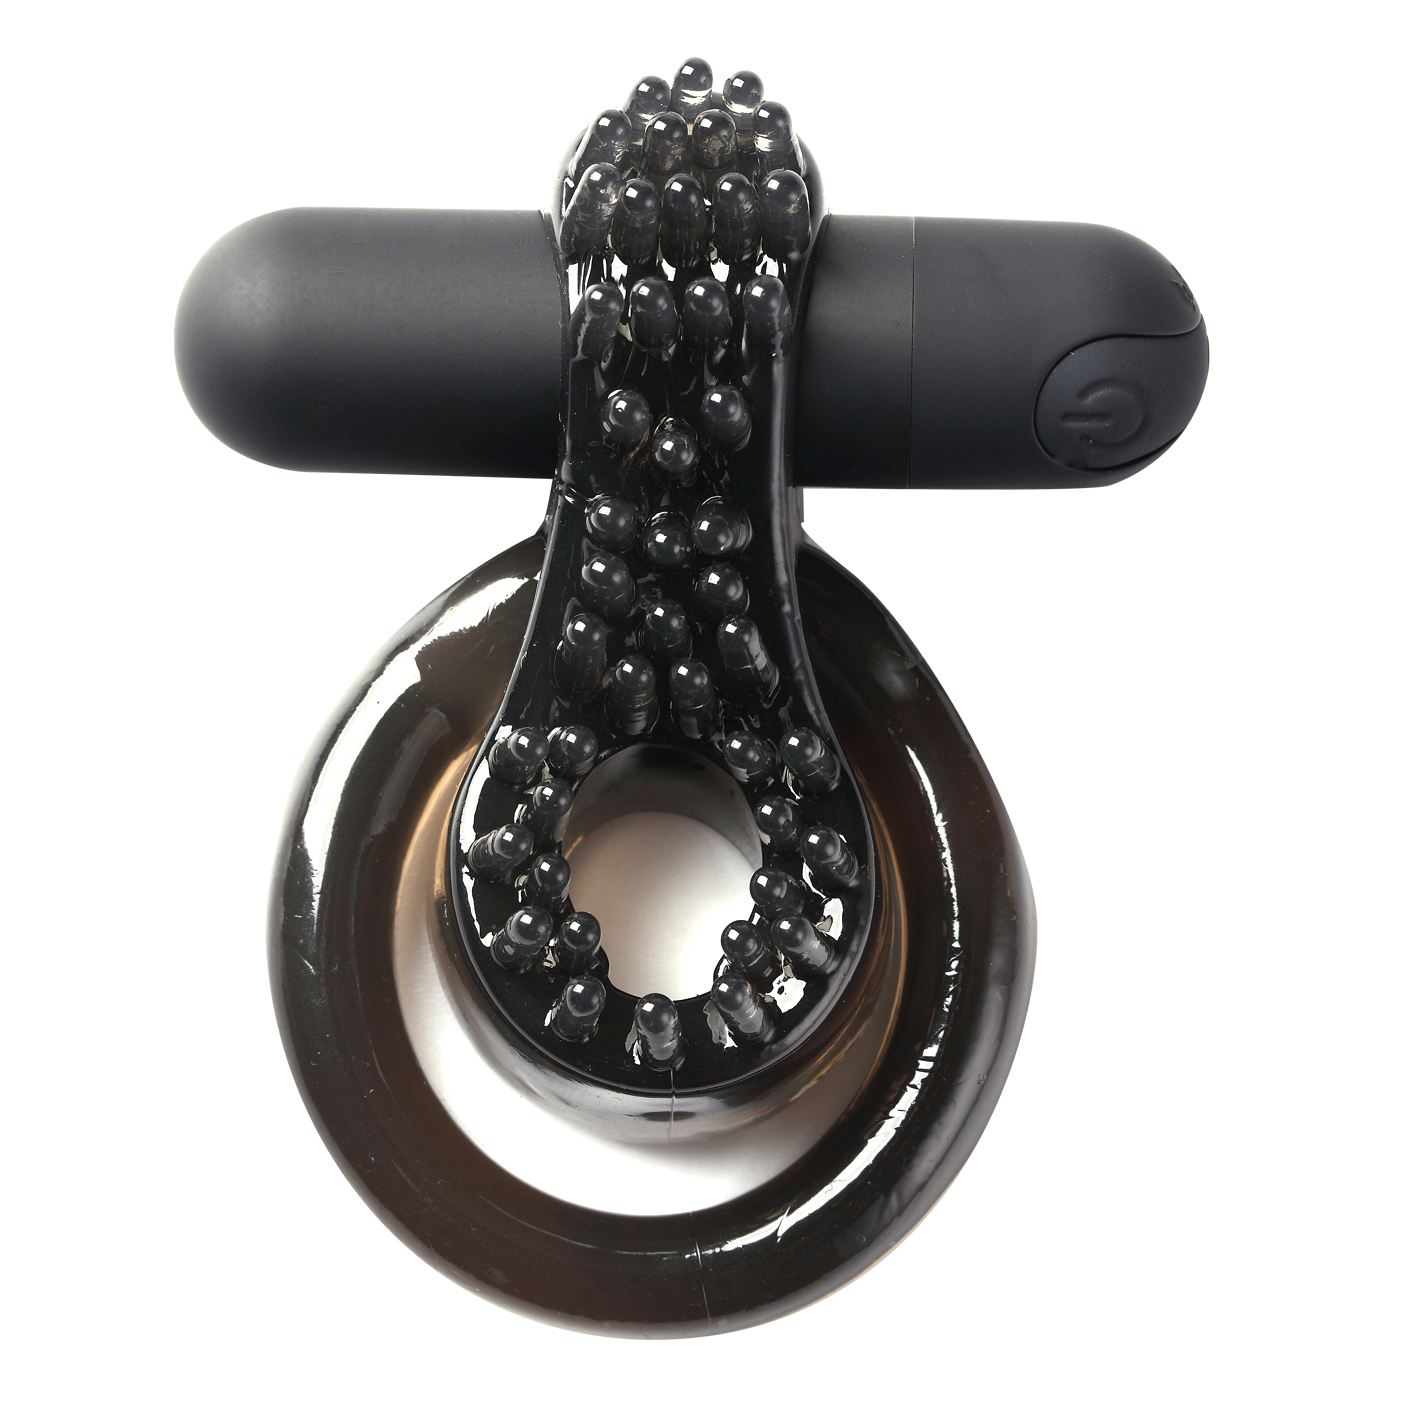 jagger vibrating erection enhancer ring black 